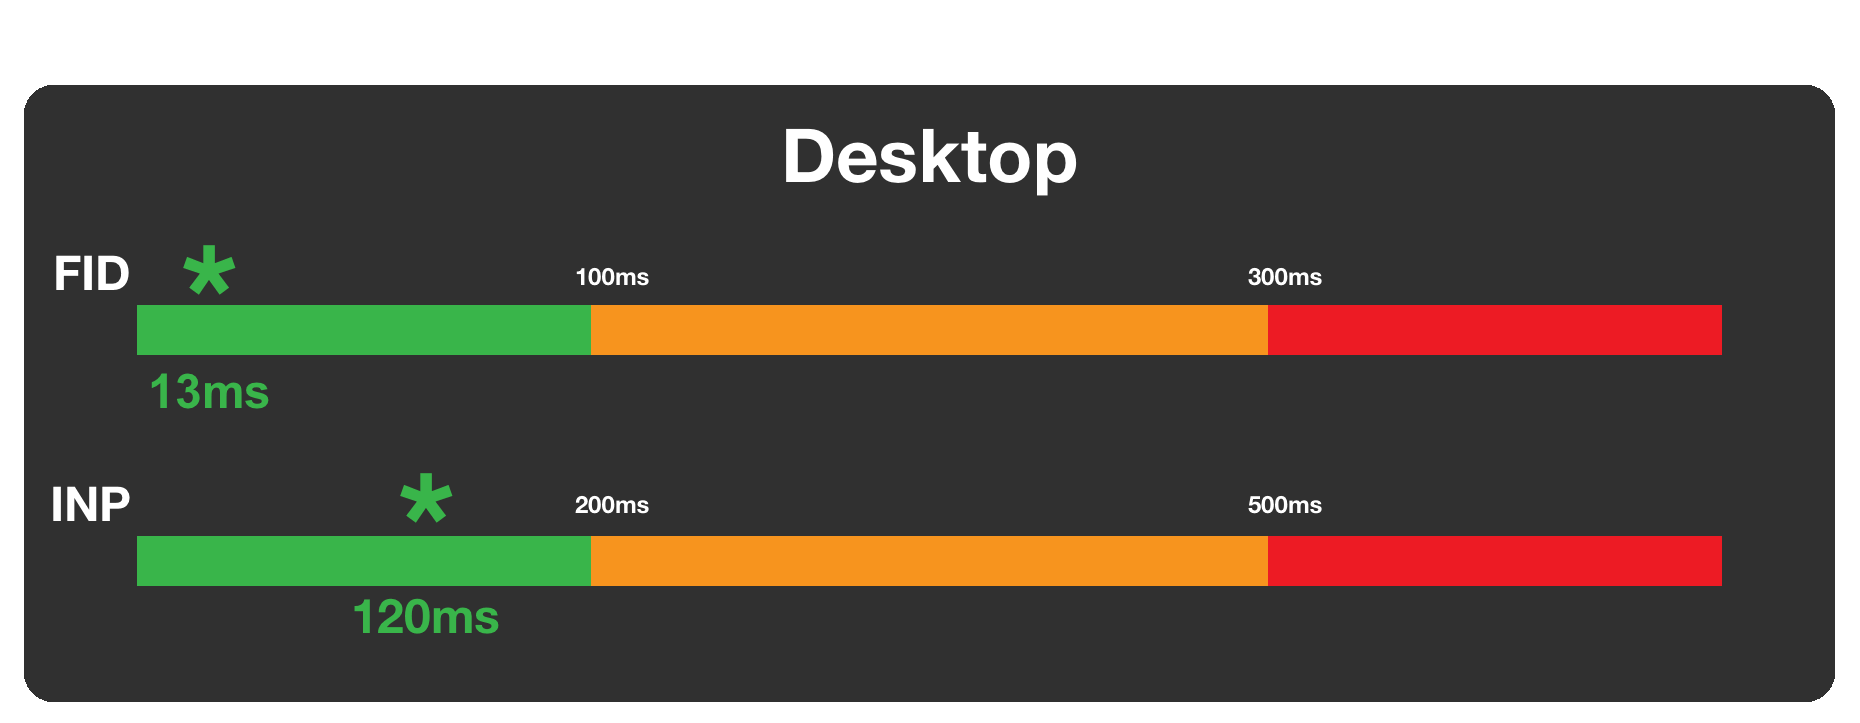 RYG bar showing inp vs fid for desktop